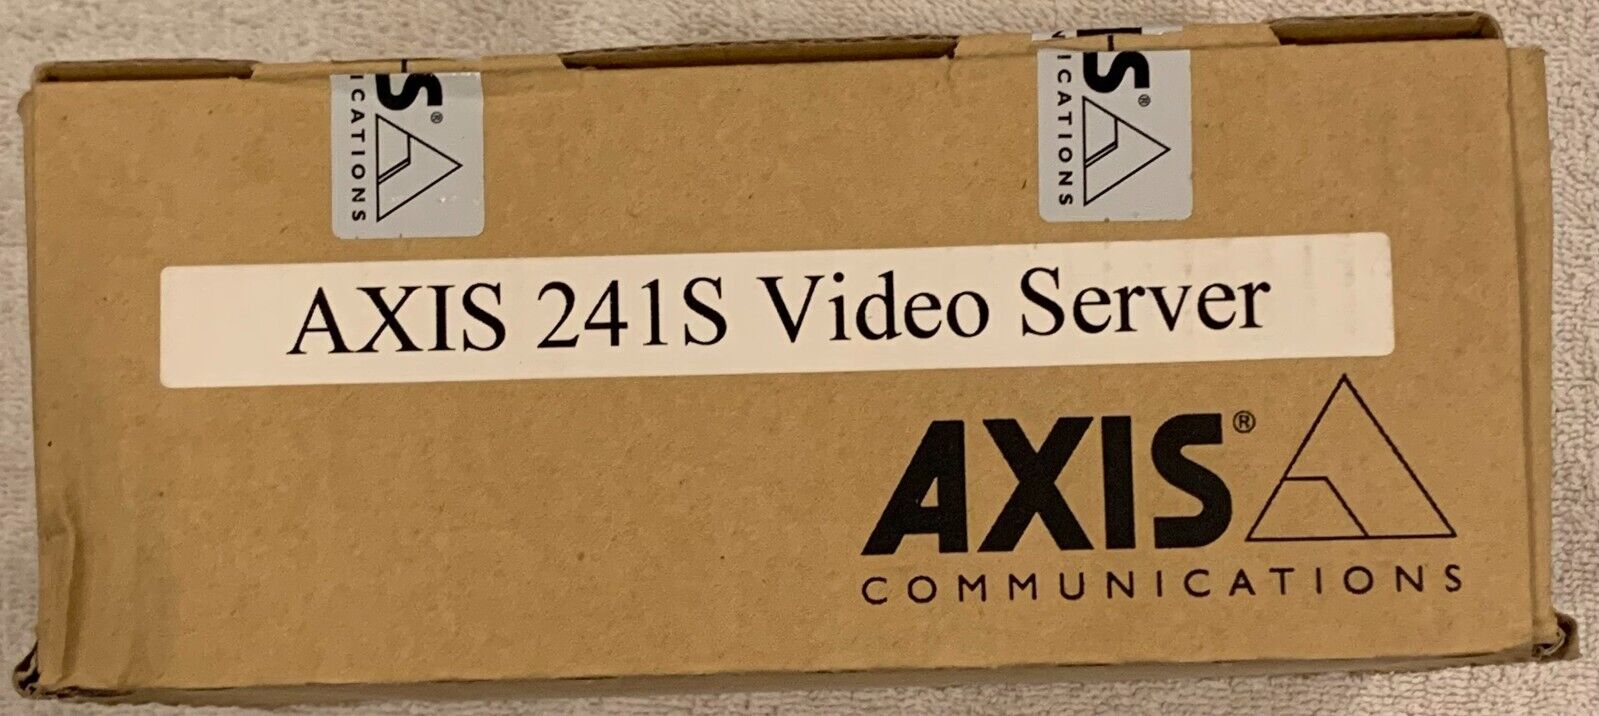 Axis 241S Video Server P/N 0186-004